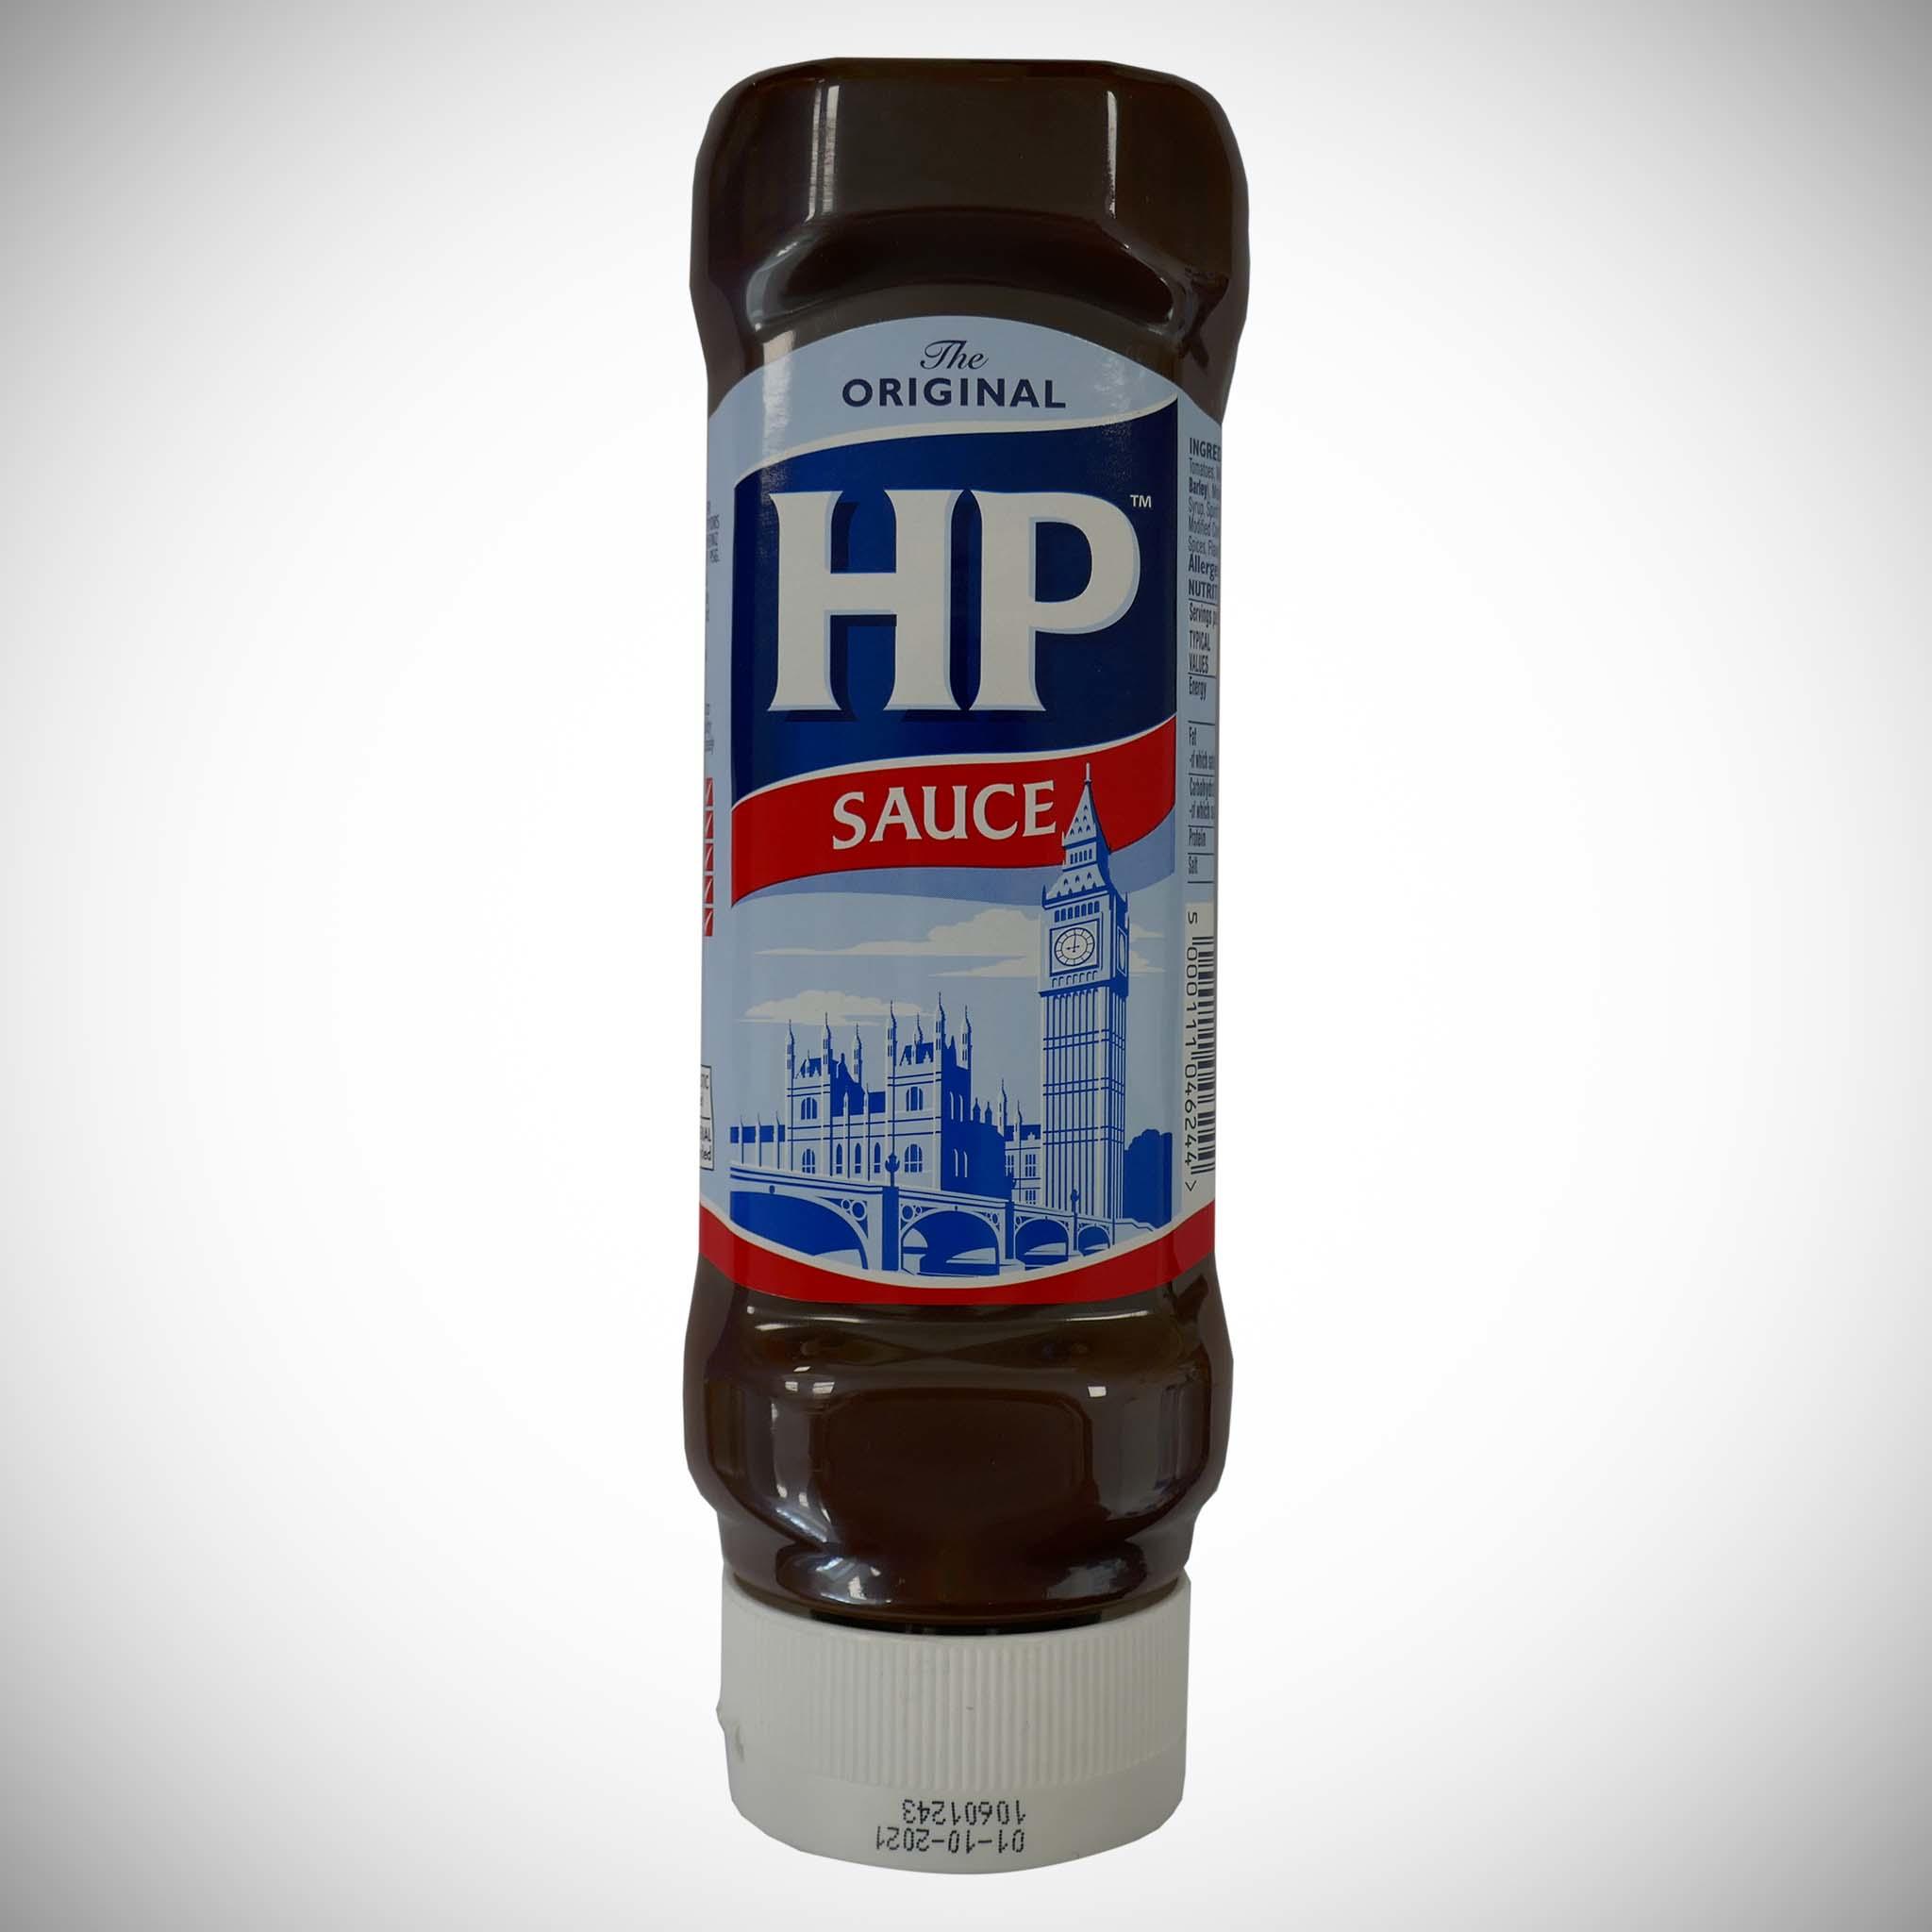 HP Sauce 450g